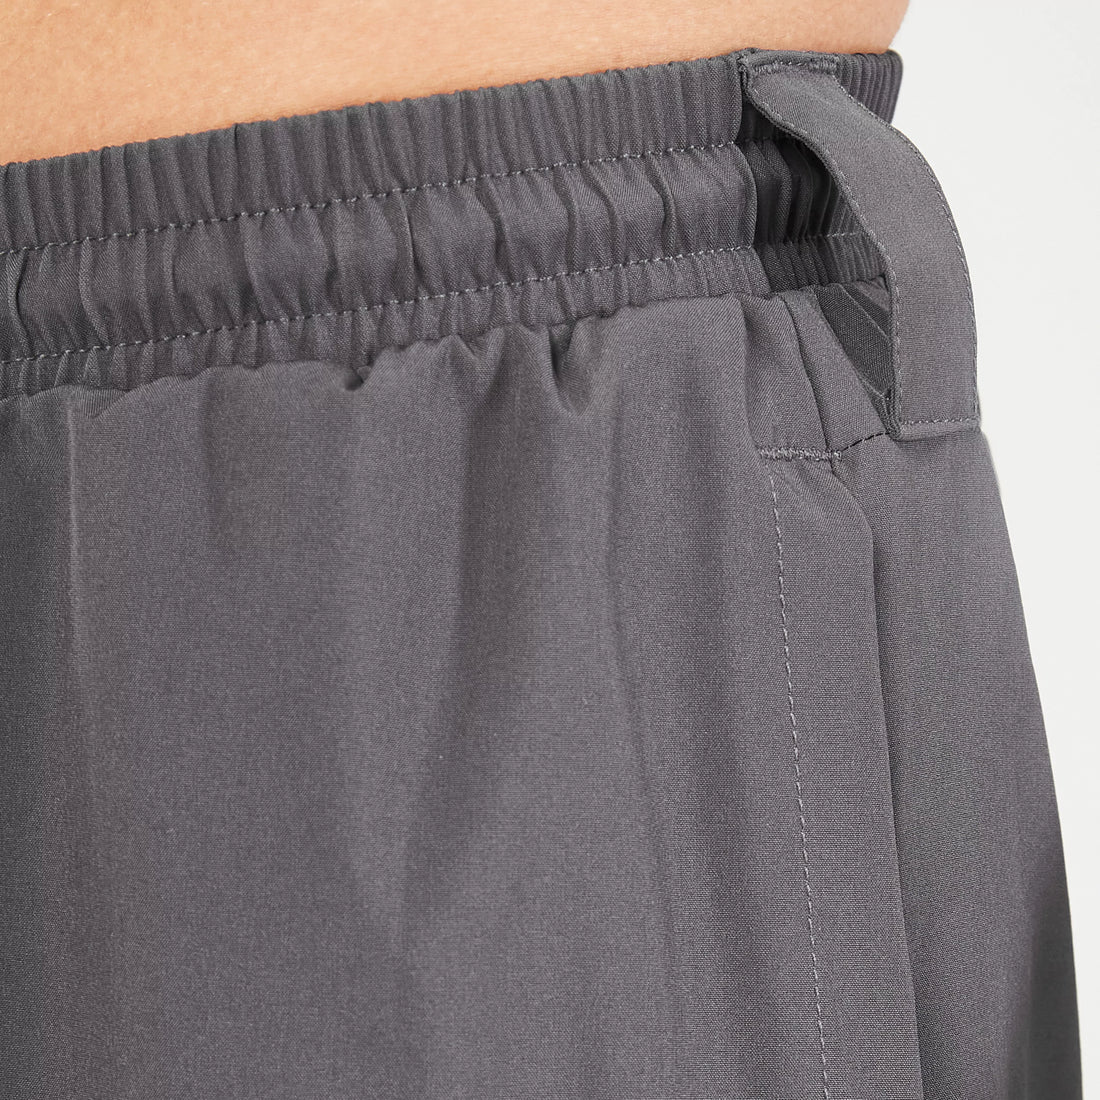 Essential Pro 5 Inch Shorts